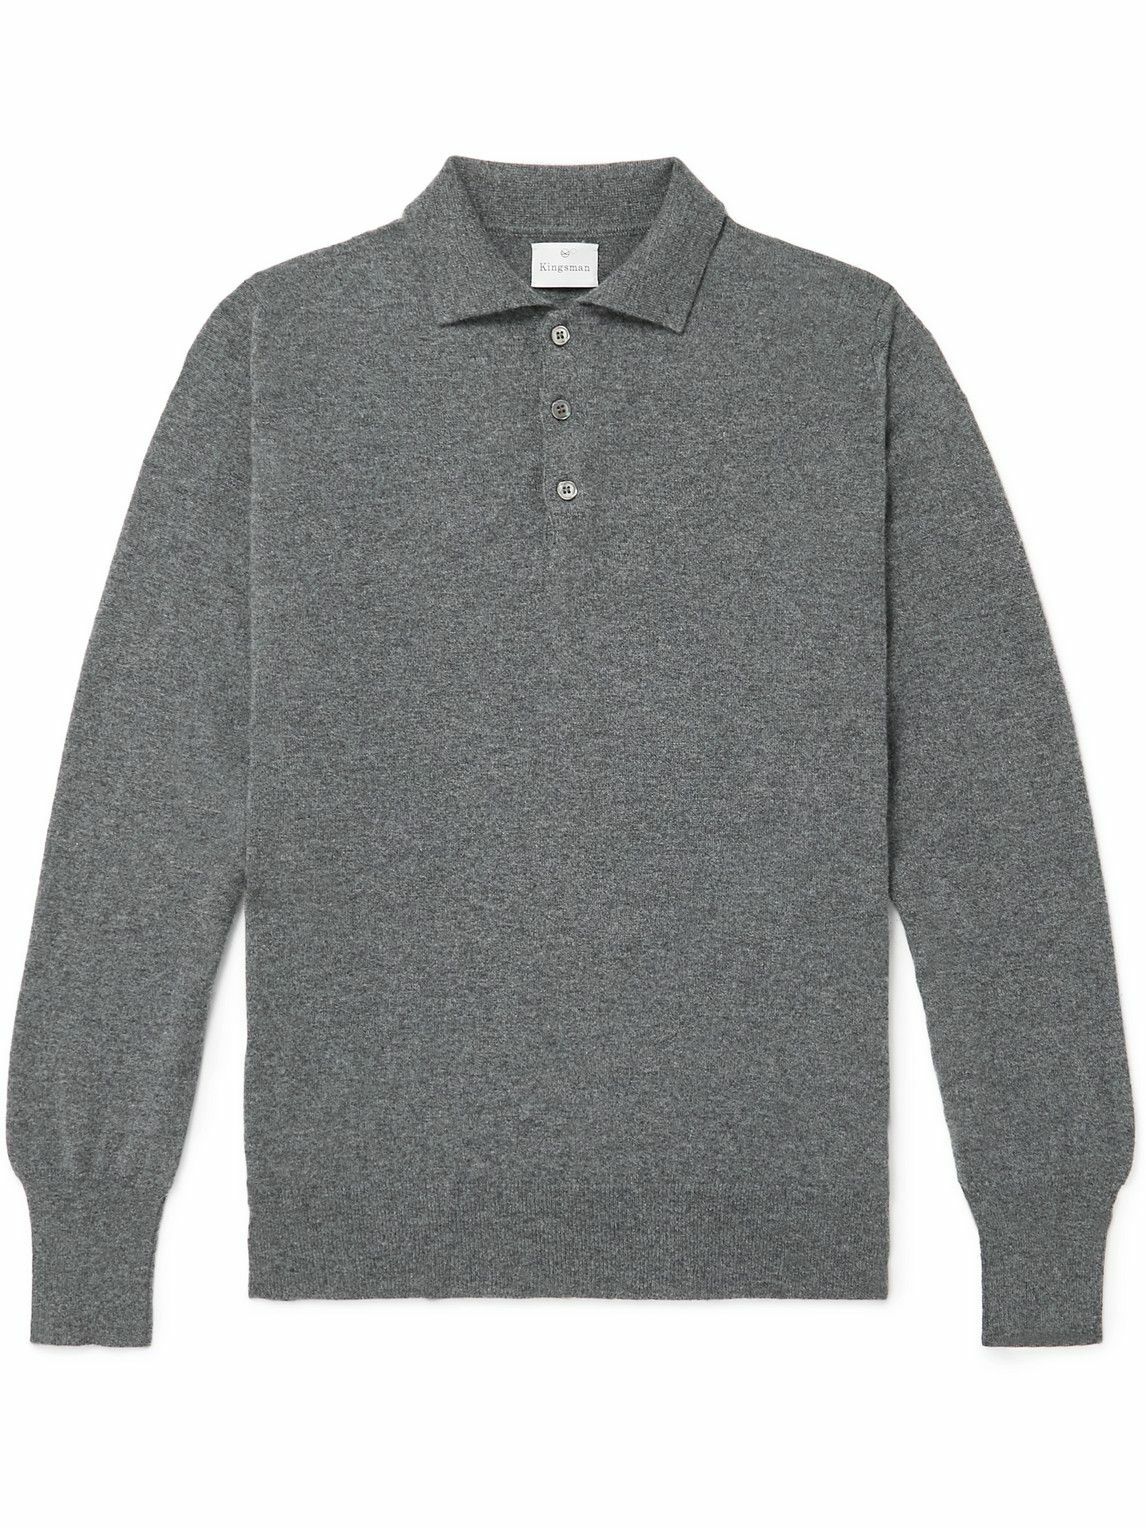 Kingsman - Oxton Cashmere Polo Shirt - Gray Kingsman